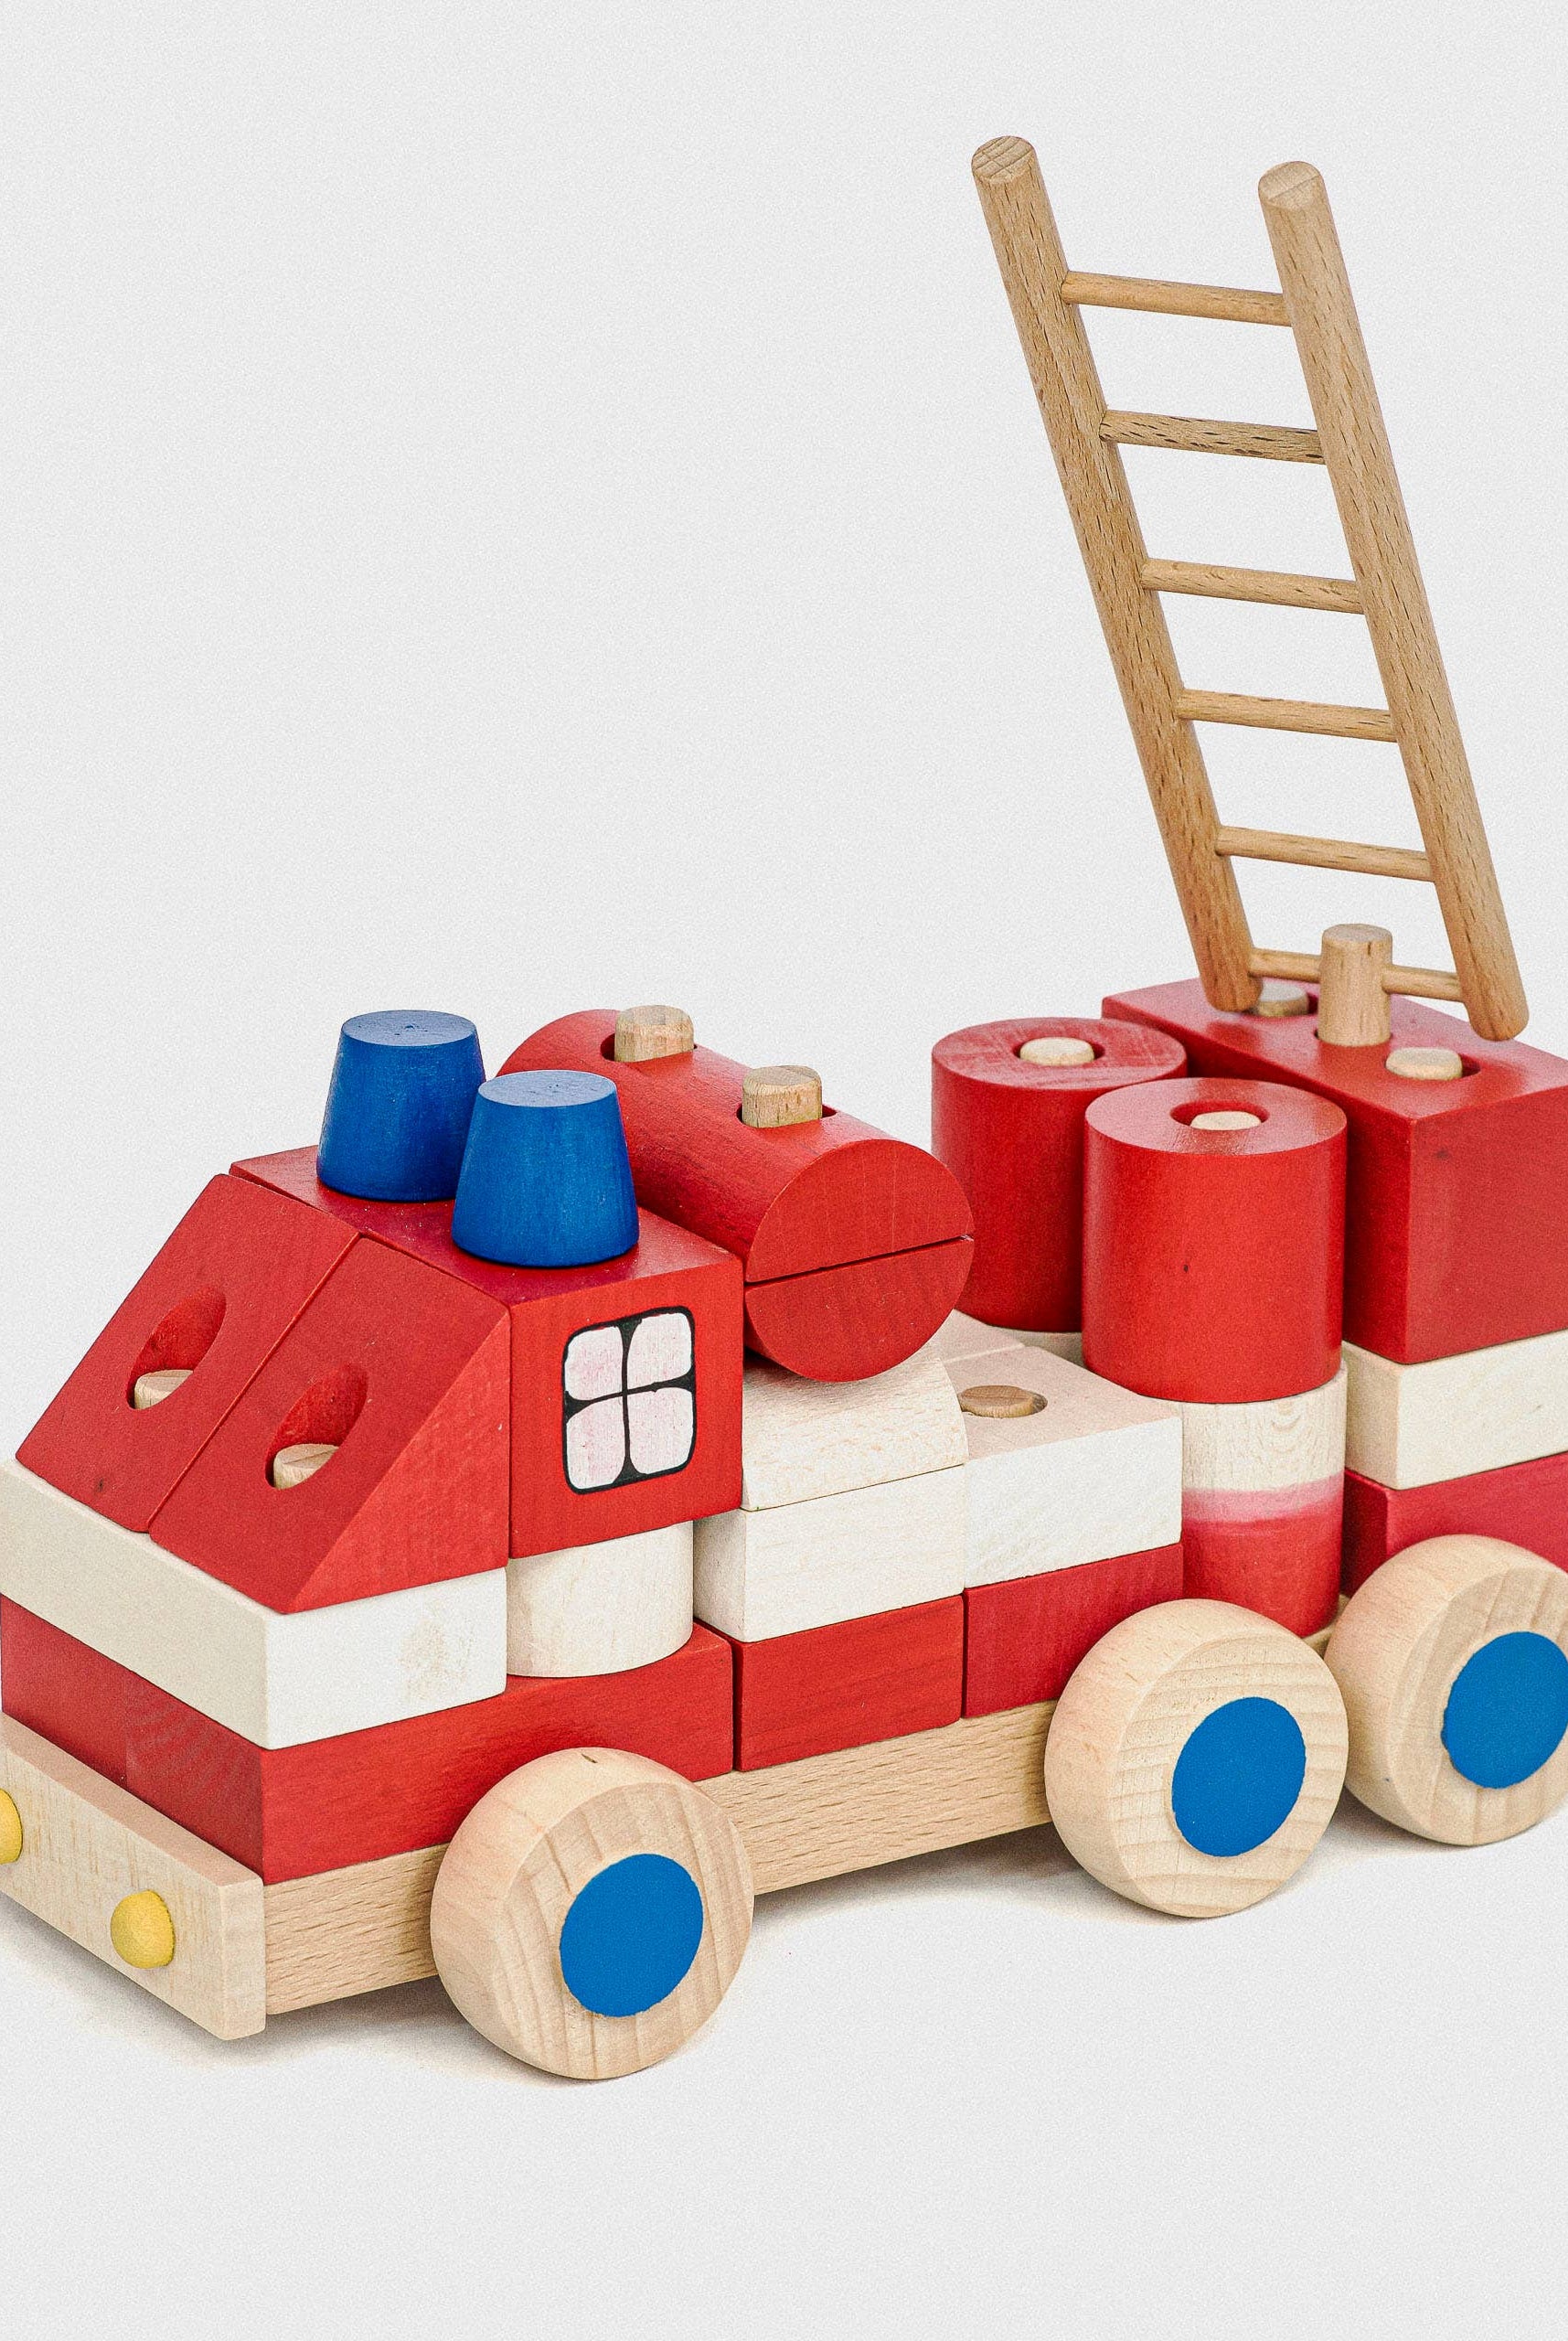 Wooden toys fire truck